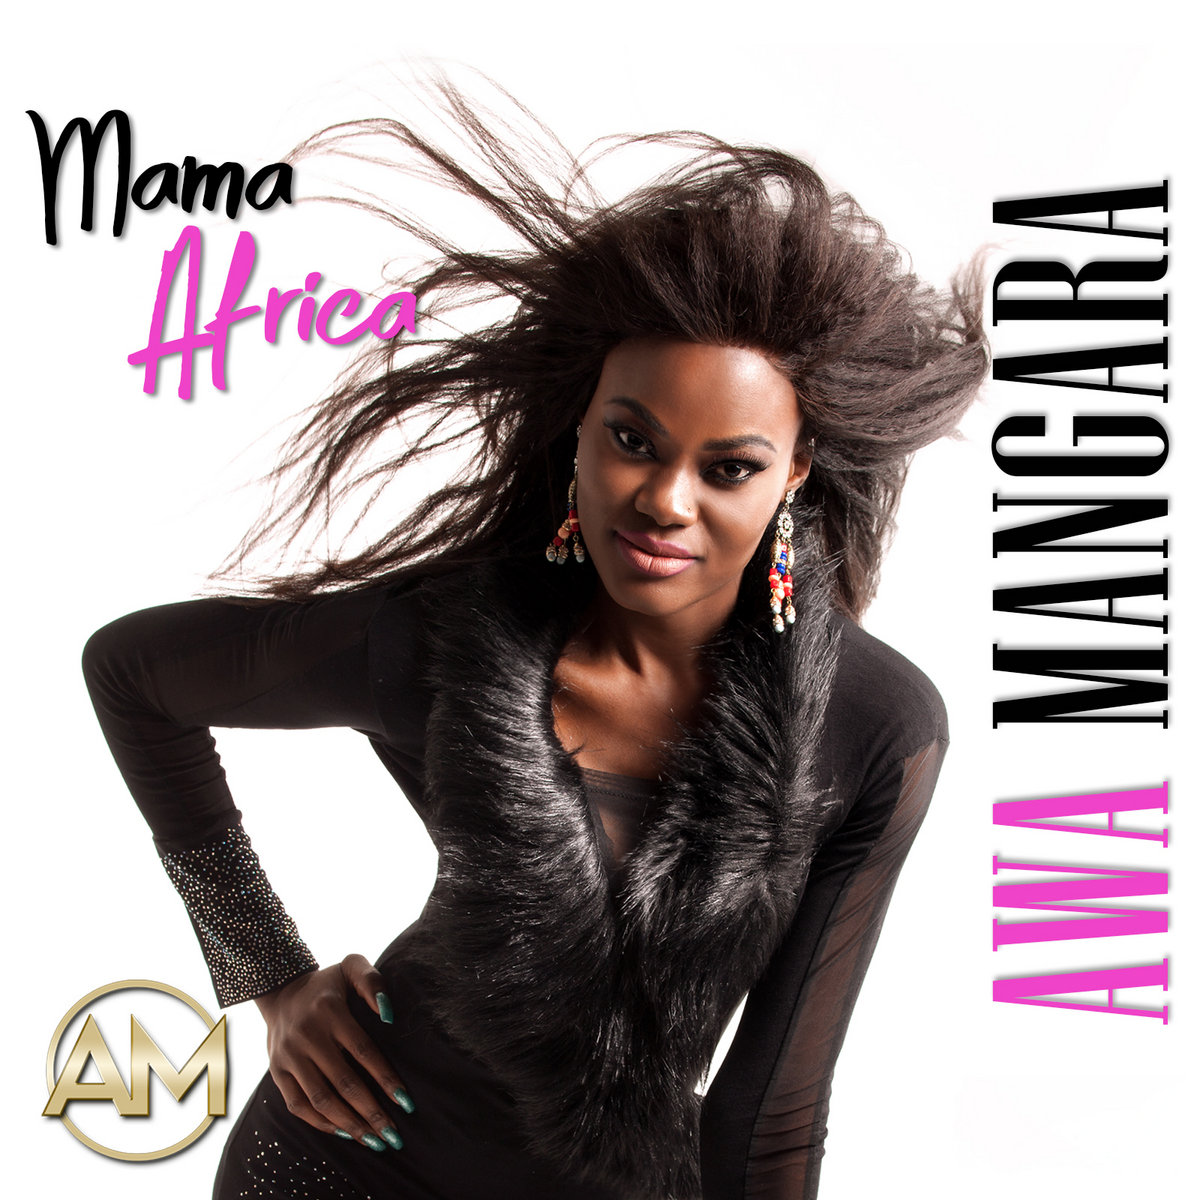 Awa. Mama Africa. Mangara. Сборник музыки mama Africa. Africa mp3